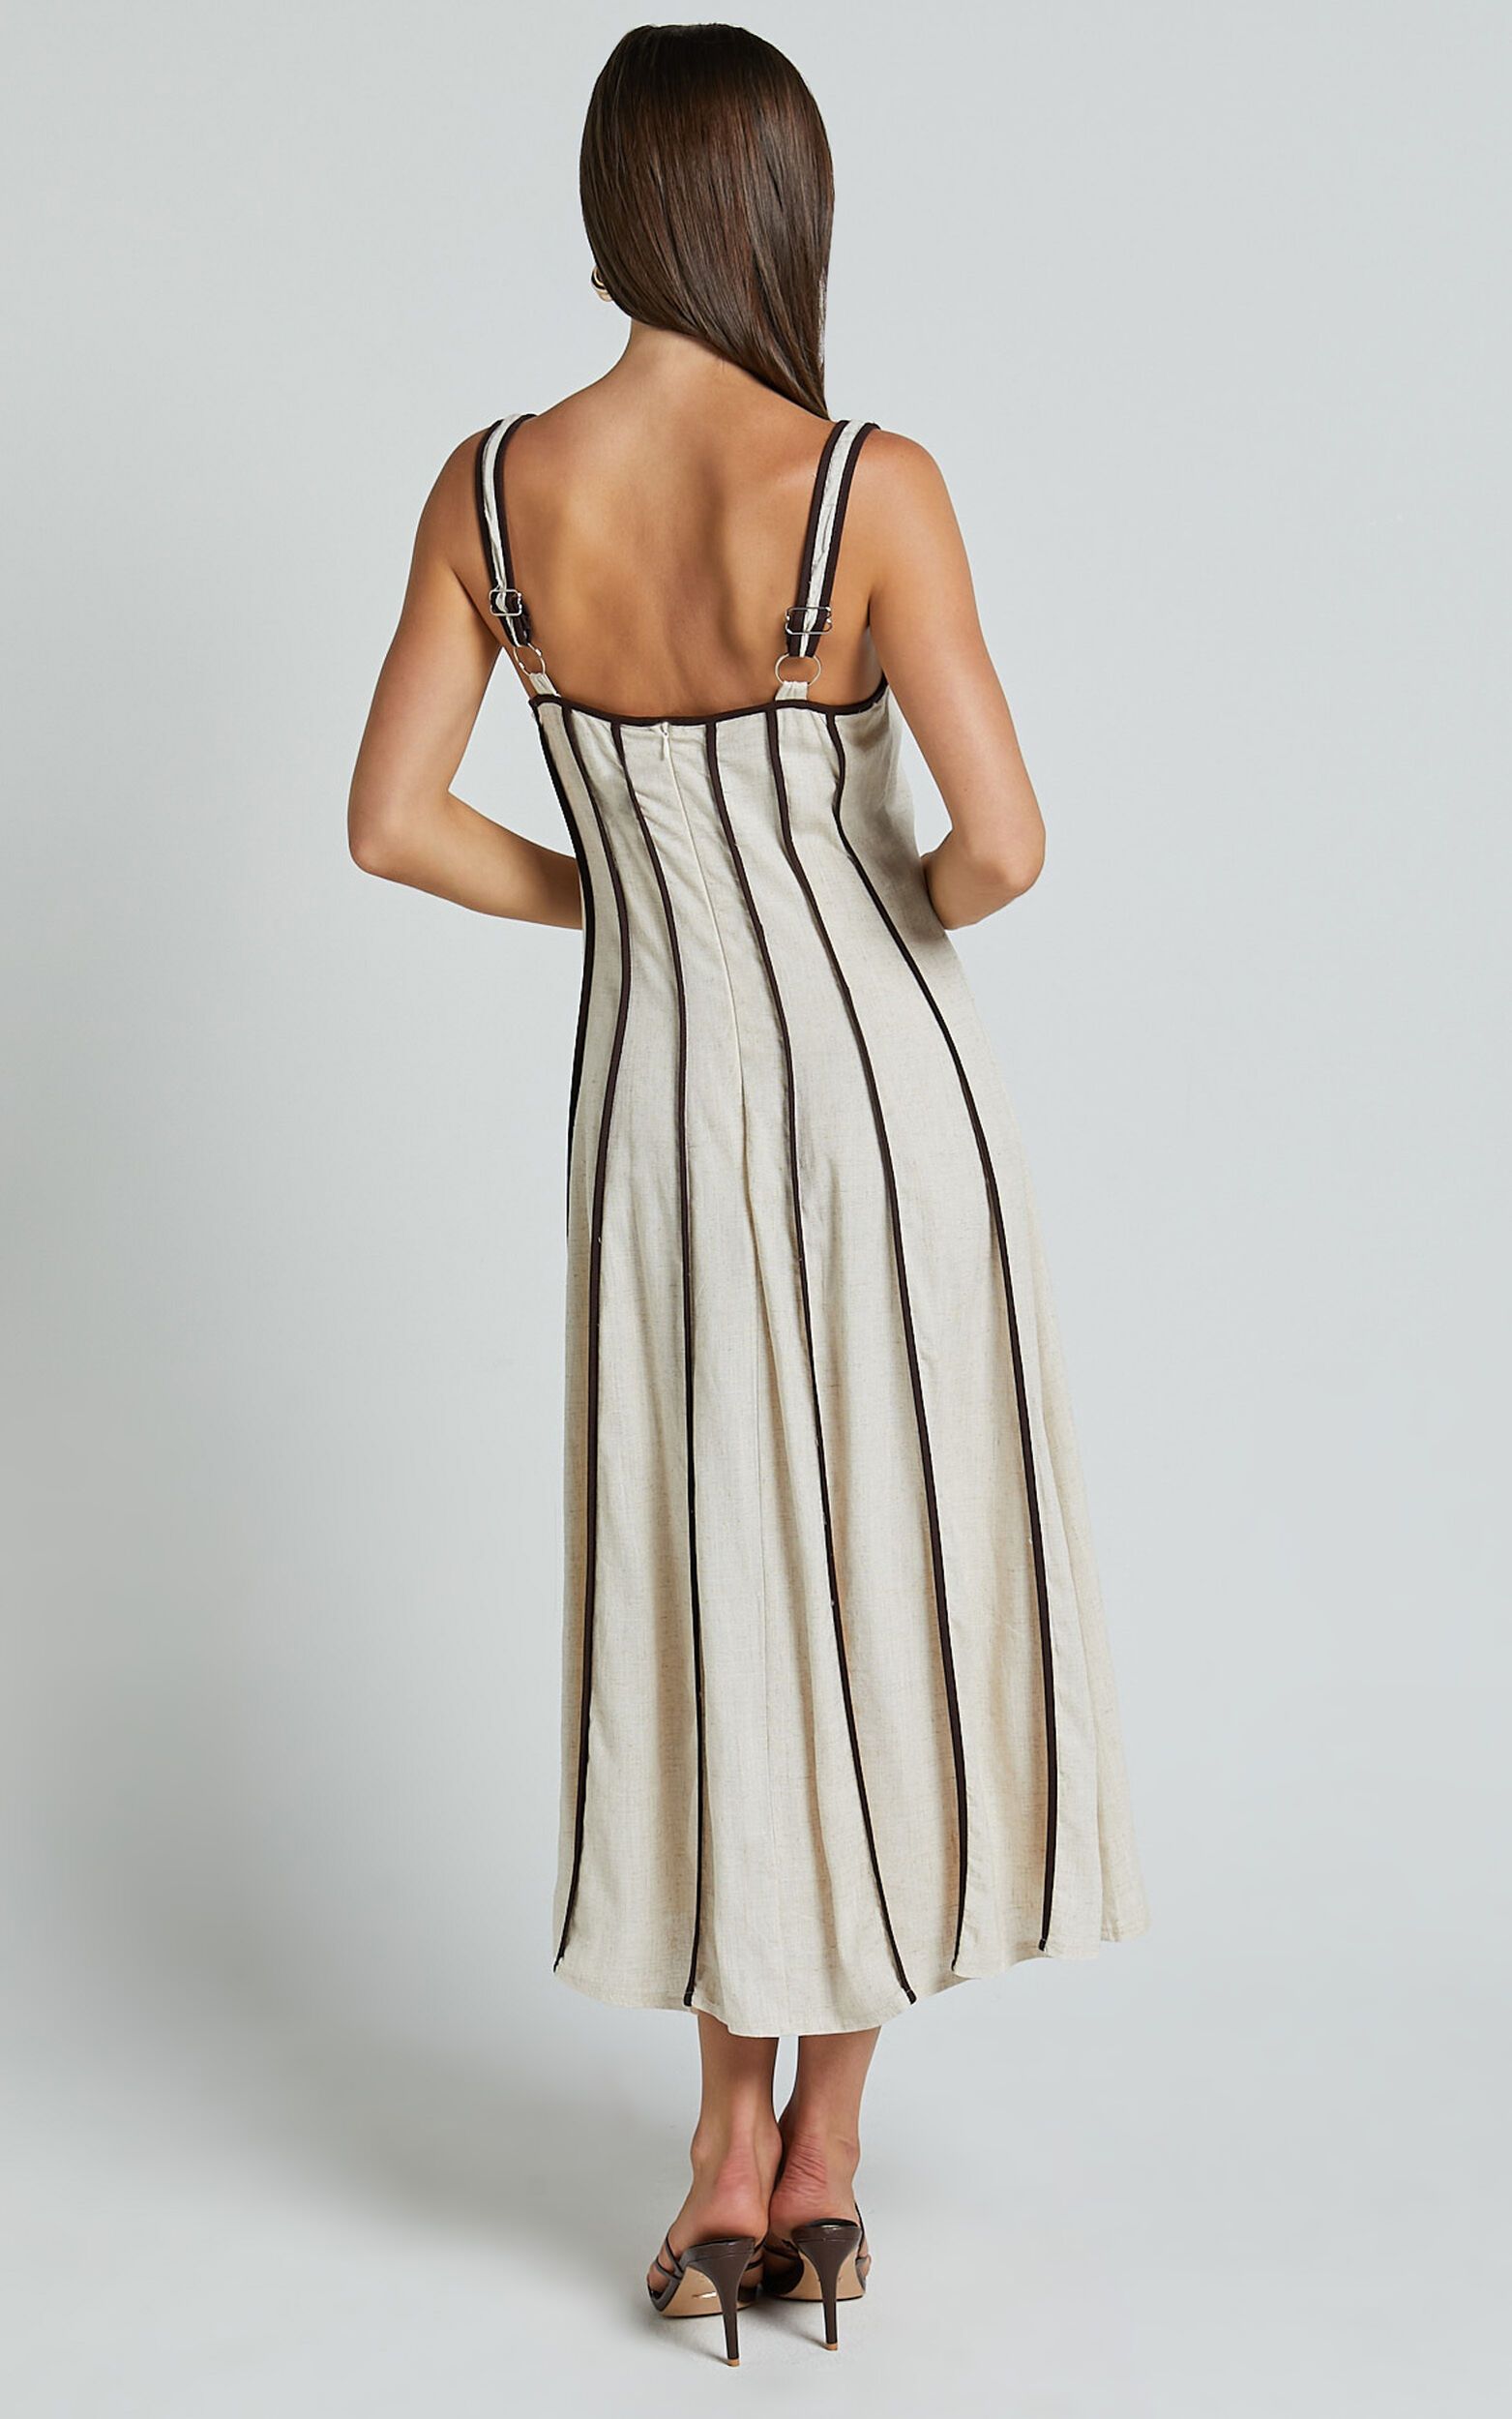 Yvette Midi Dress - Scoop Neck Sleeveless A Line Dress in Natural/Chocolate | Showpo (ANZ)